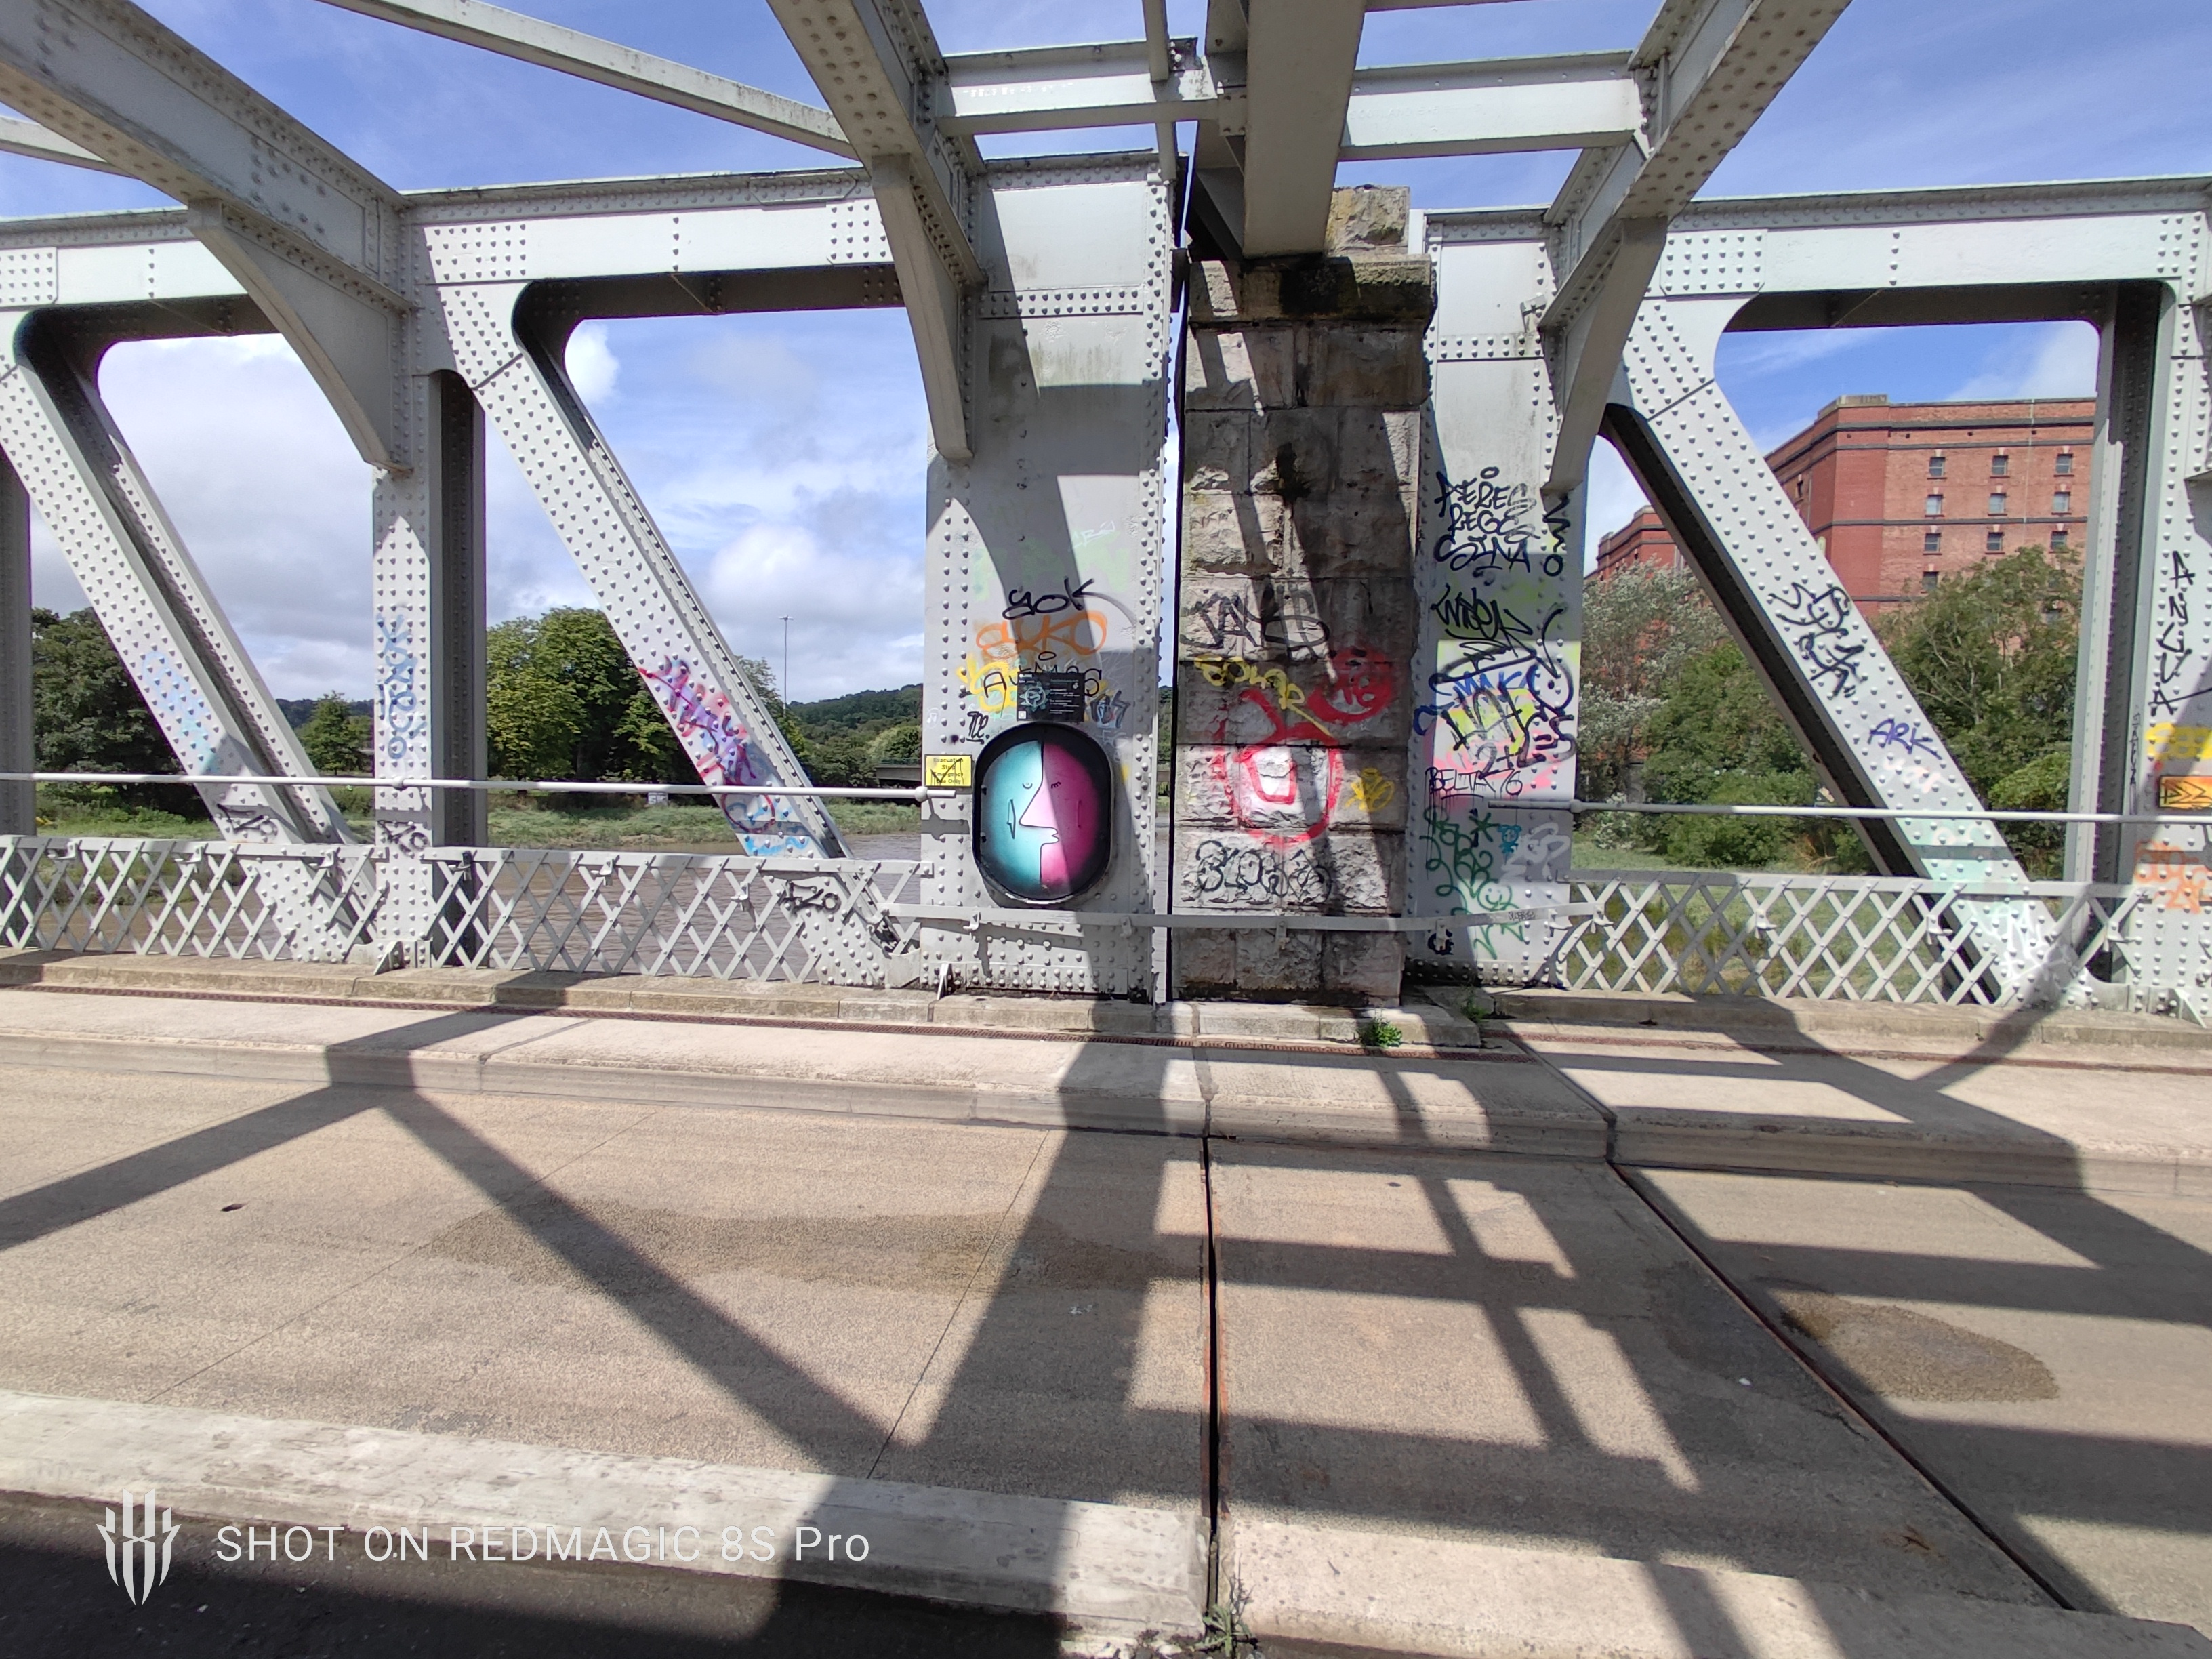 An image taken stood on a bridge